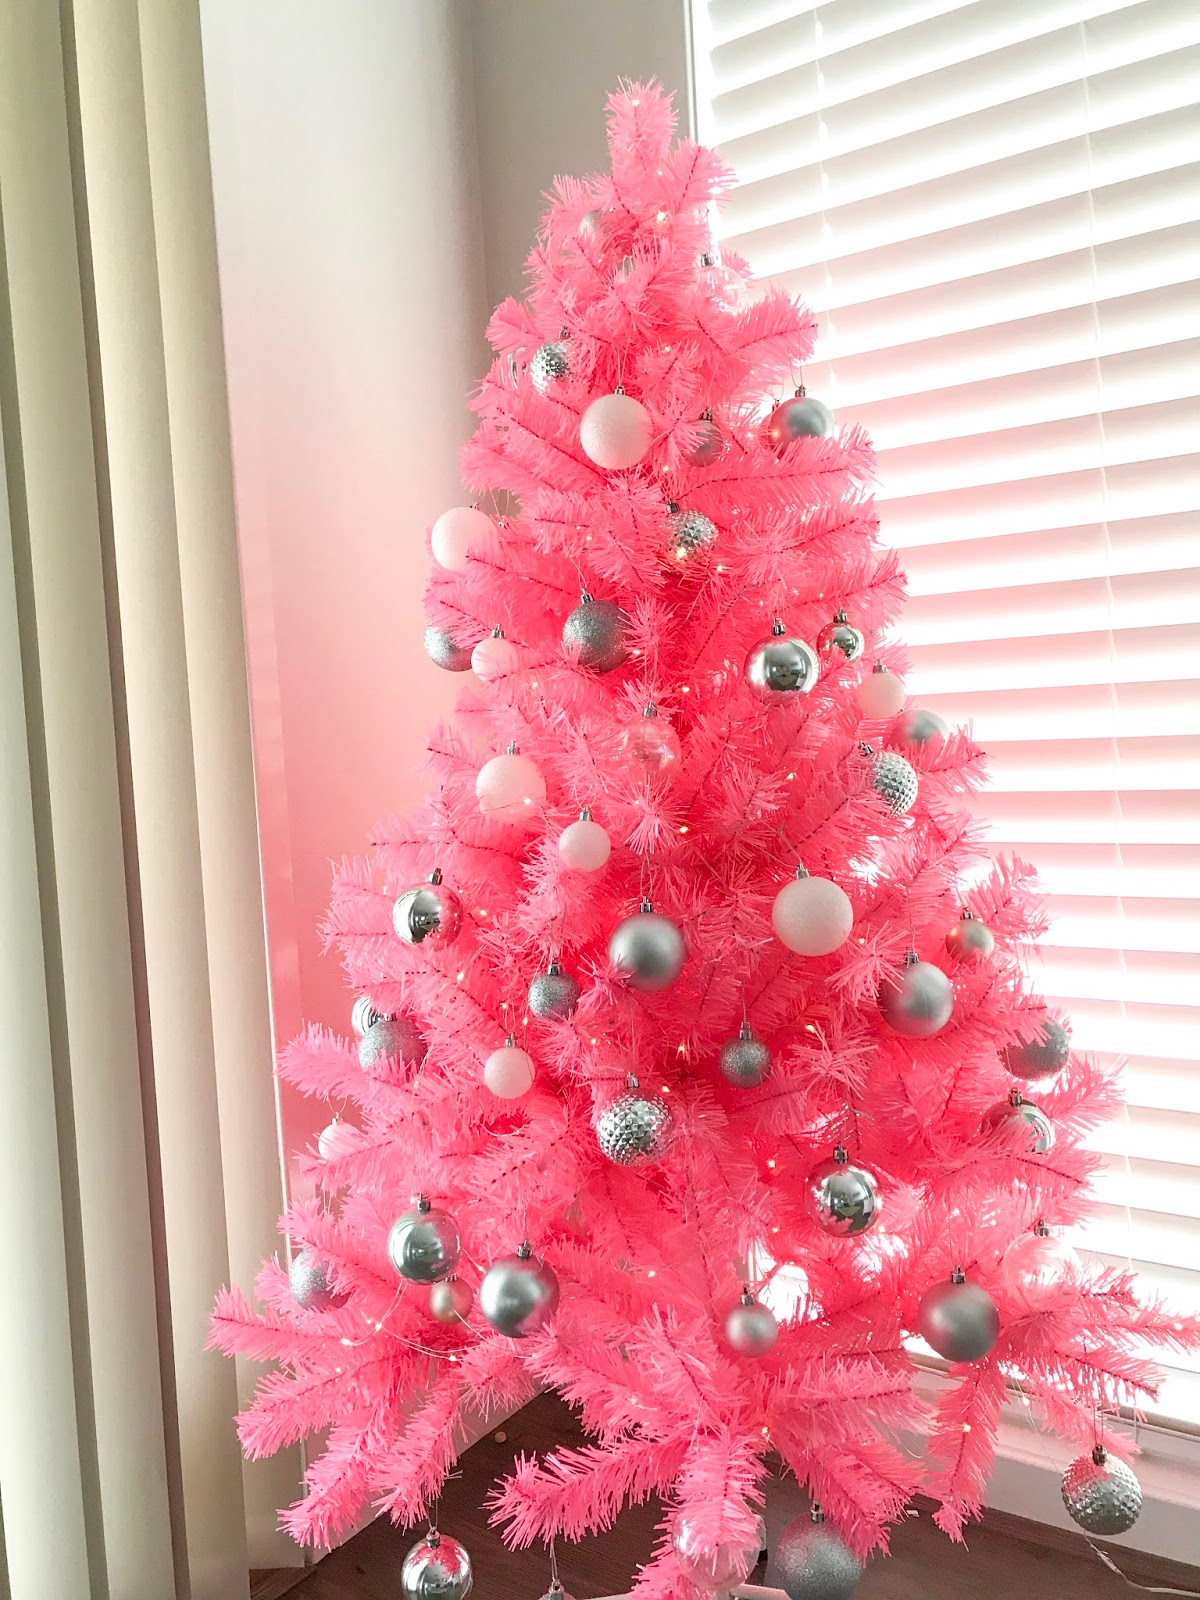 Think Pink... the story of a Christmas tree Samelia's Mum